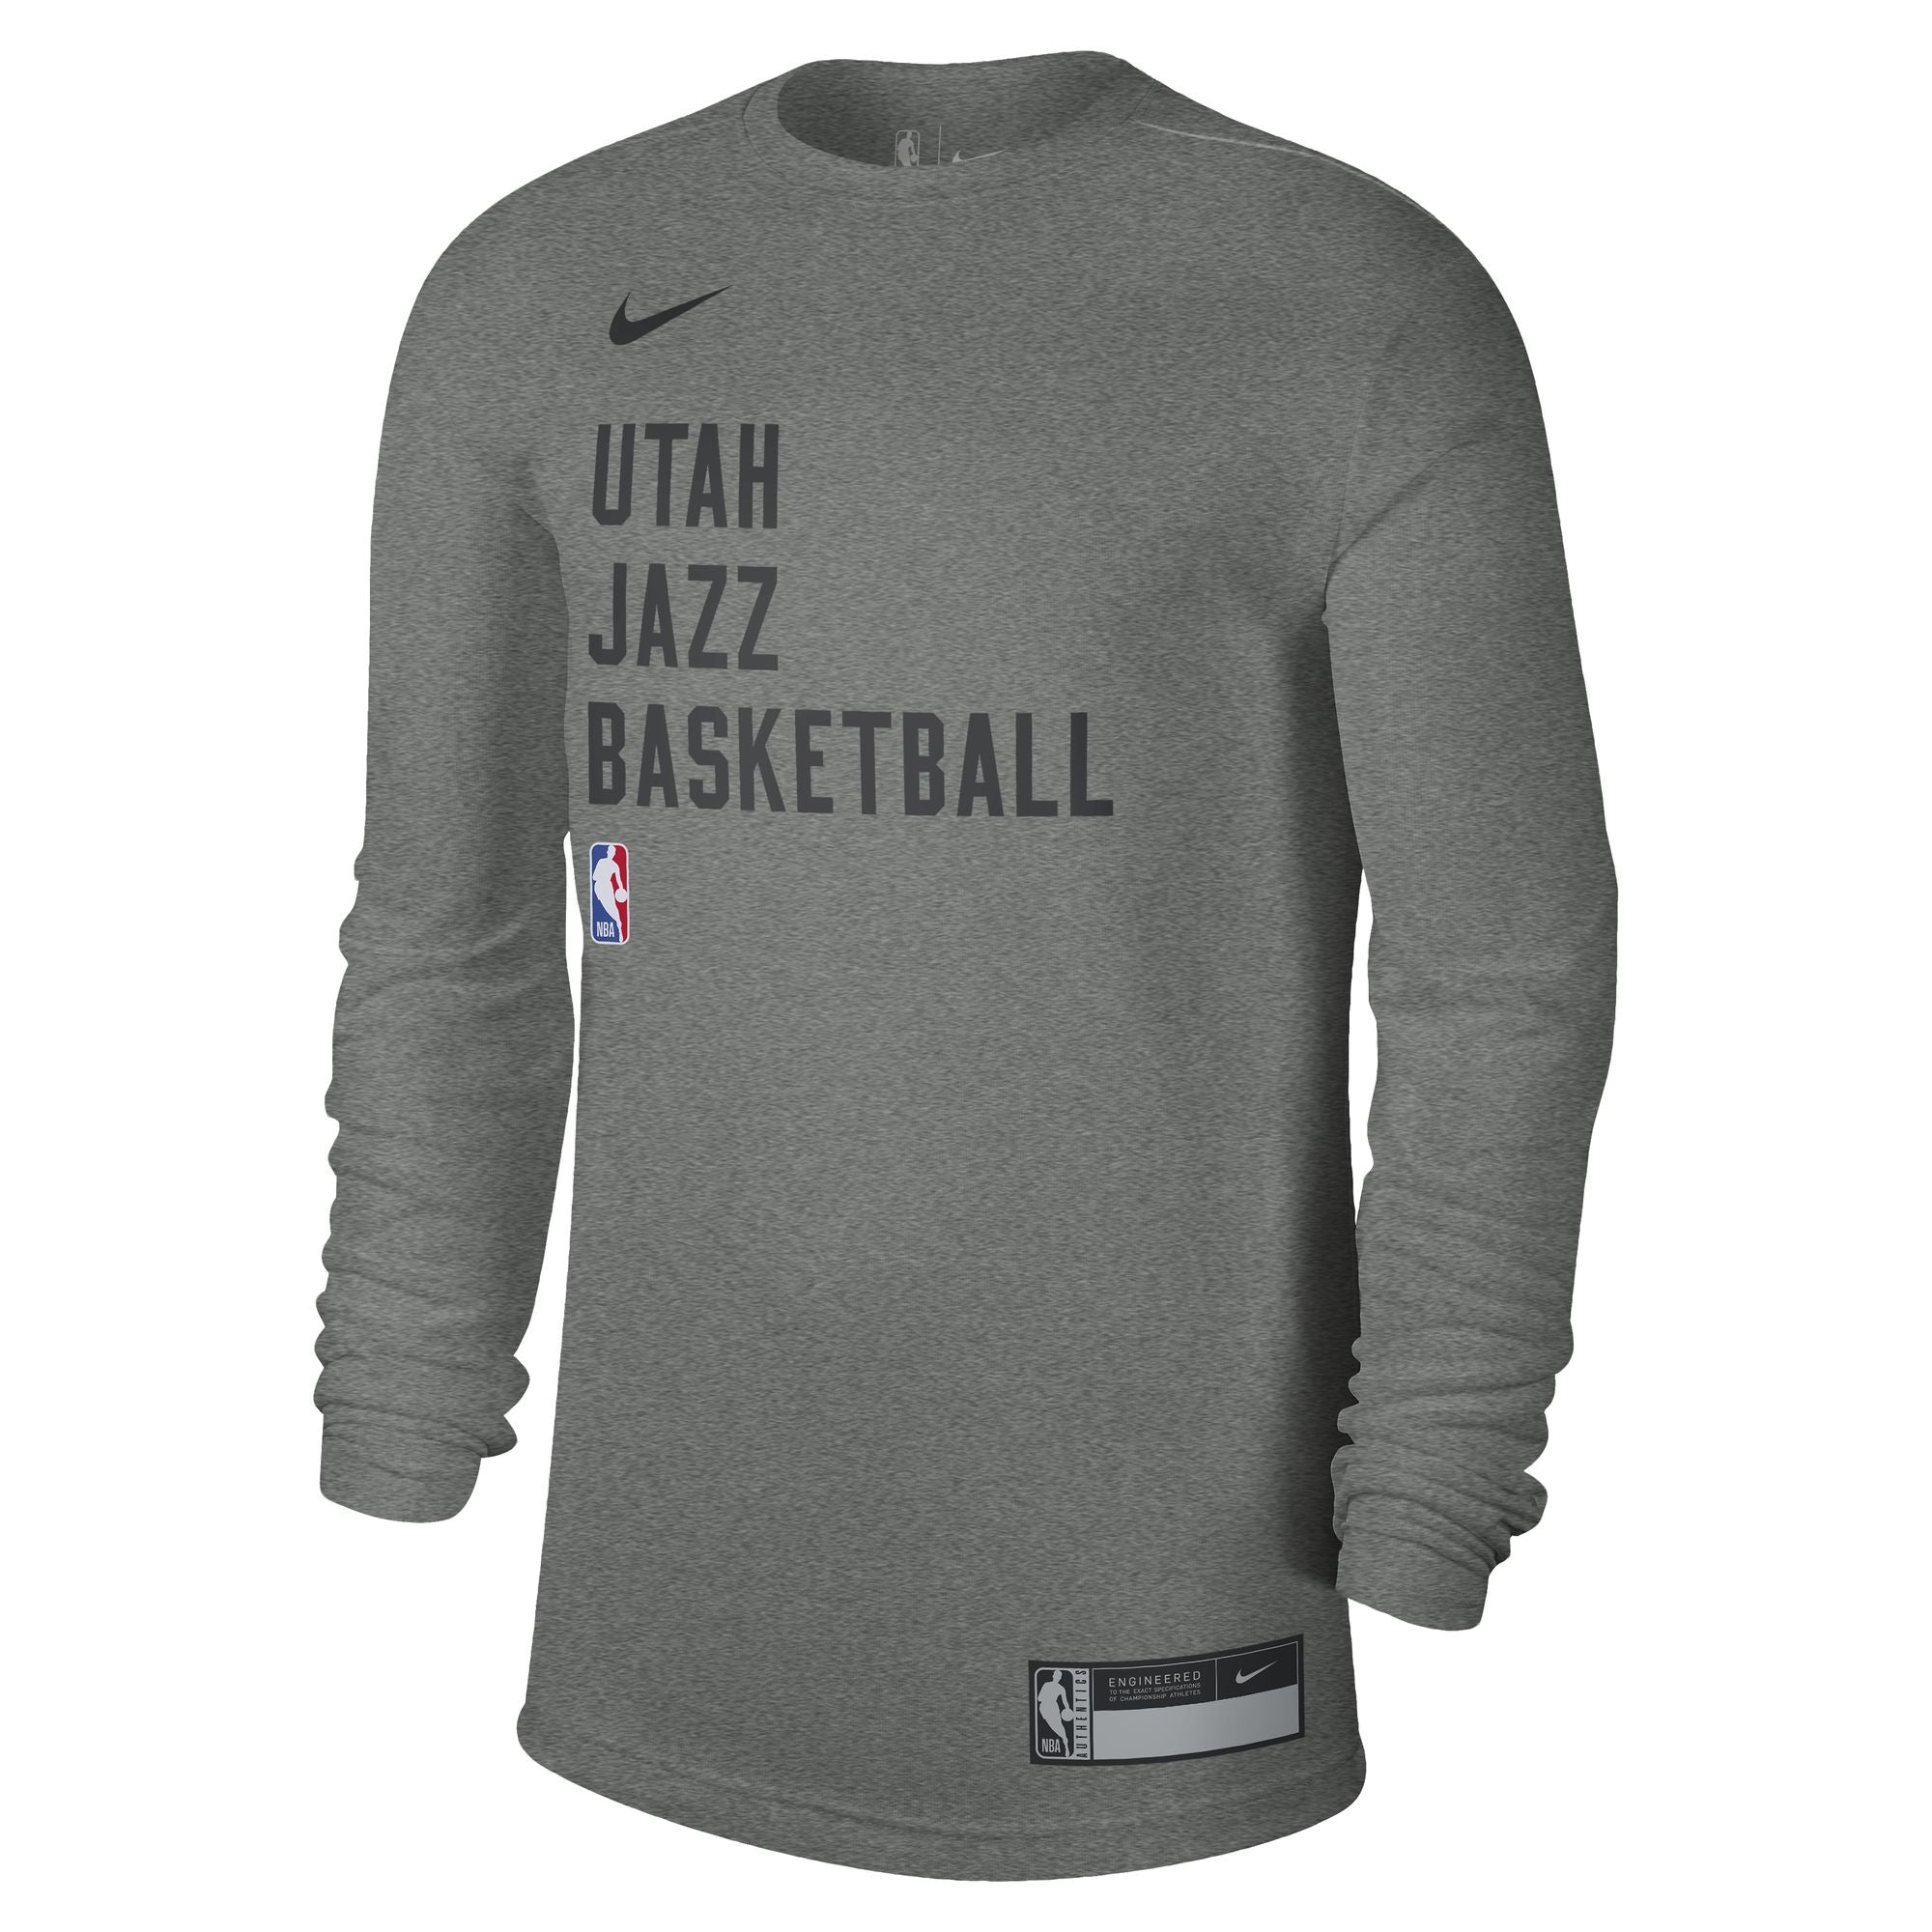 Utah Jazz Team Store on X: 🖤❤️THEY'RE HERE🧡💛 New City